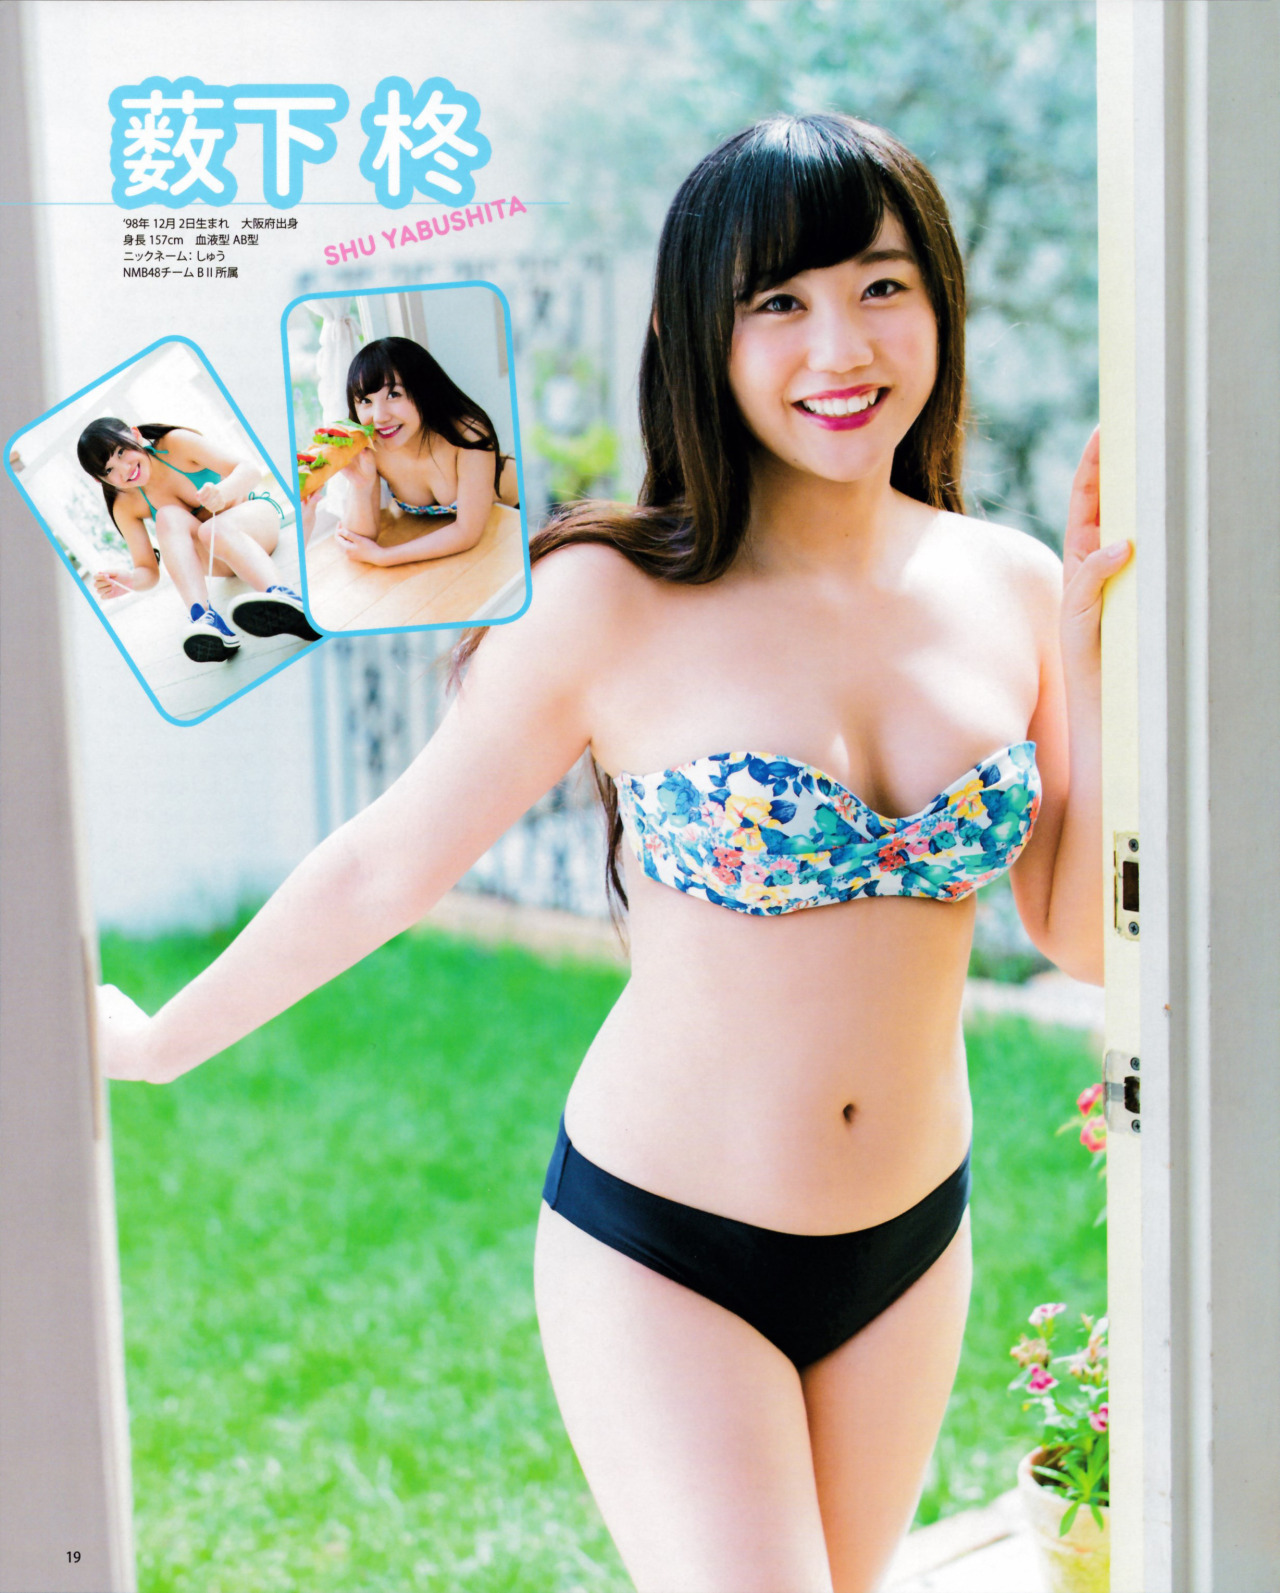 Yagura Fuuko 矢倉楓子, Yabushita Shu 薮下柊 NMB48, BOMB Magazine October 2015 Gravure